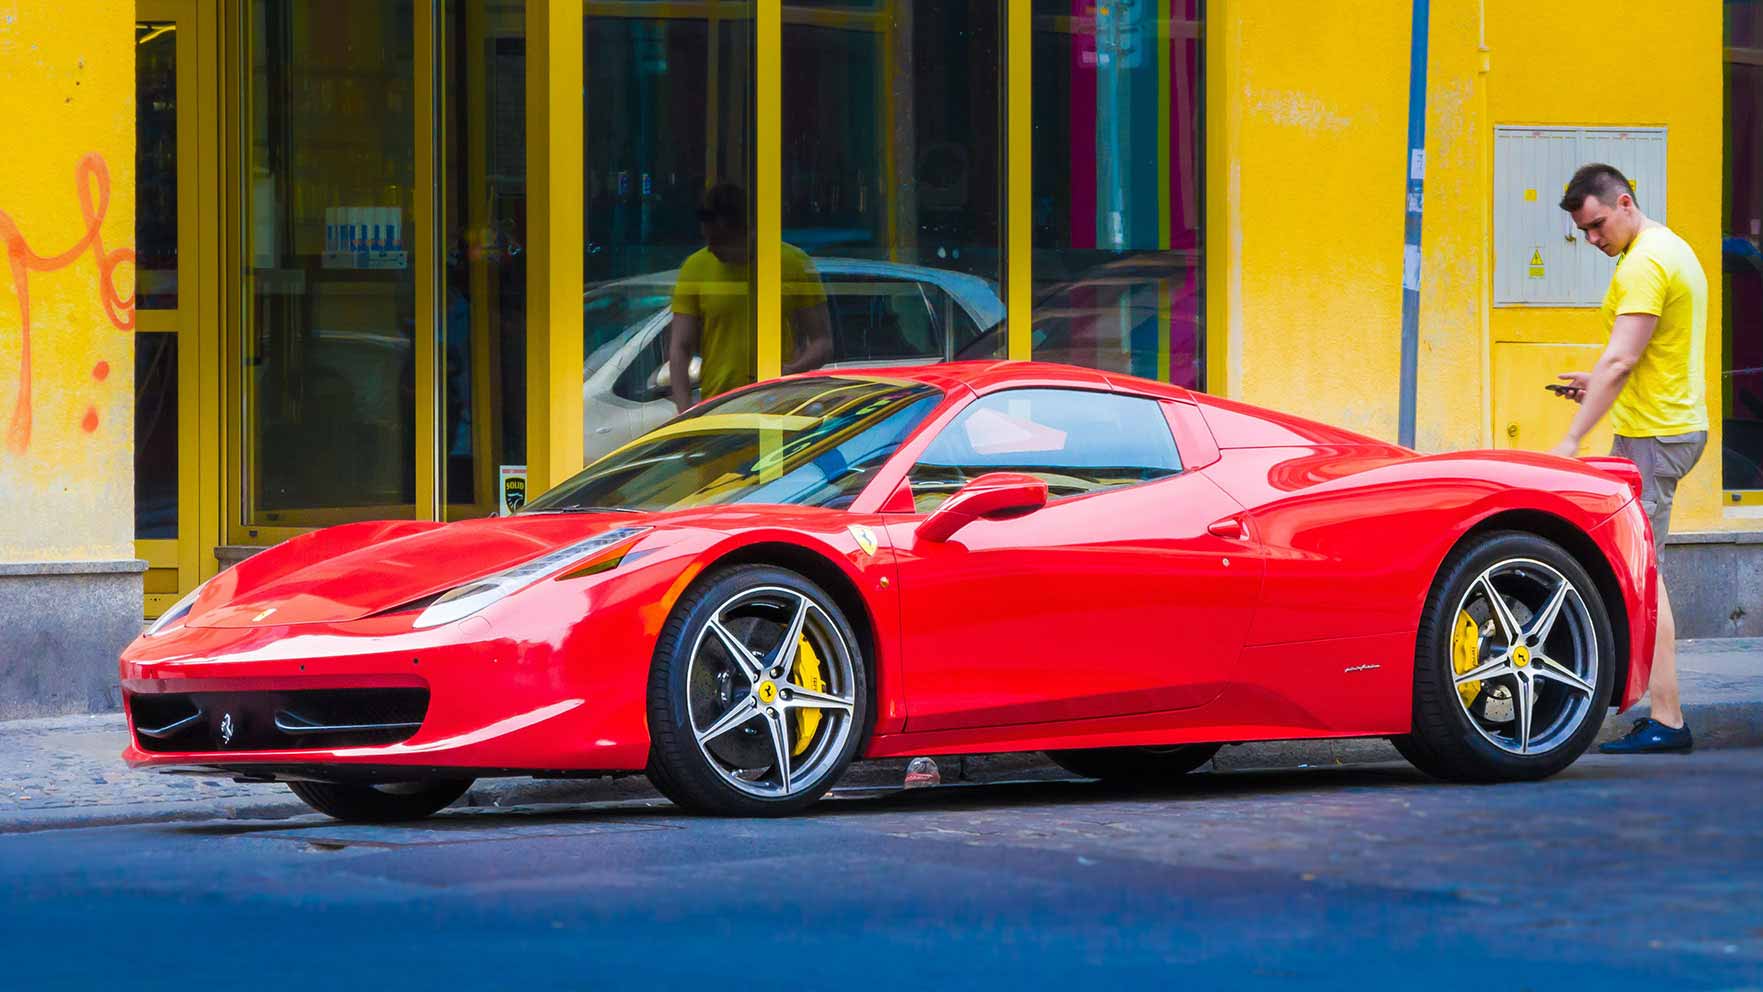 Red Ferrari - that's all 